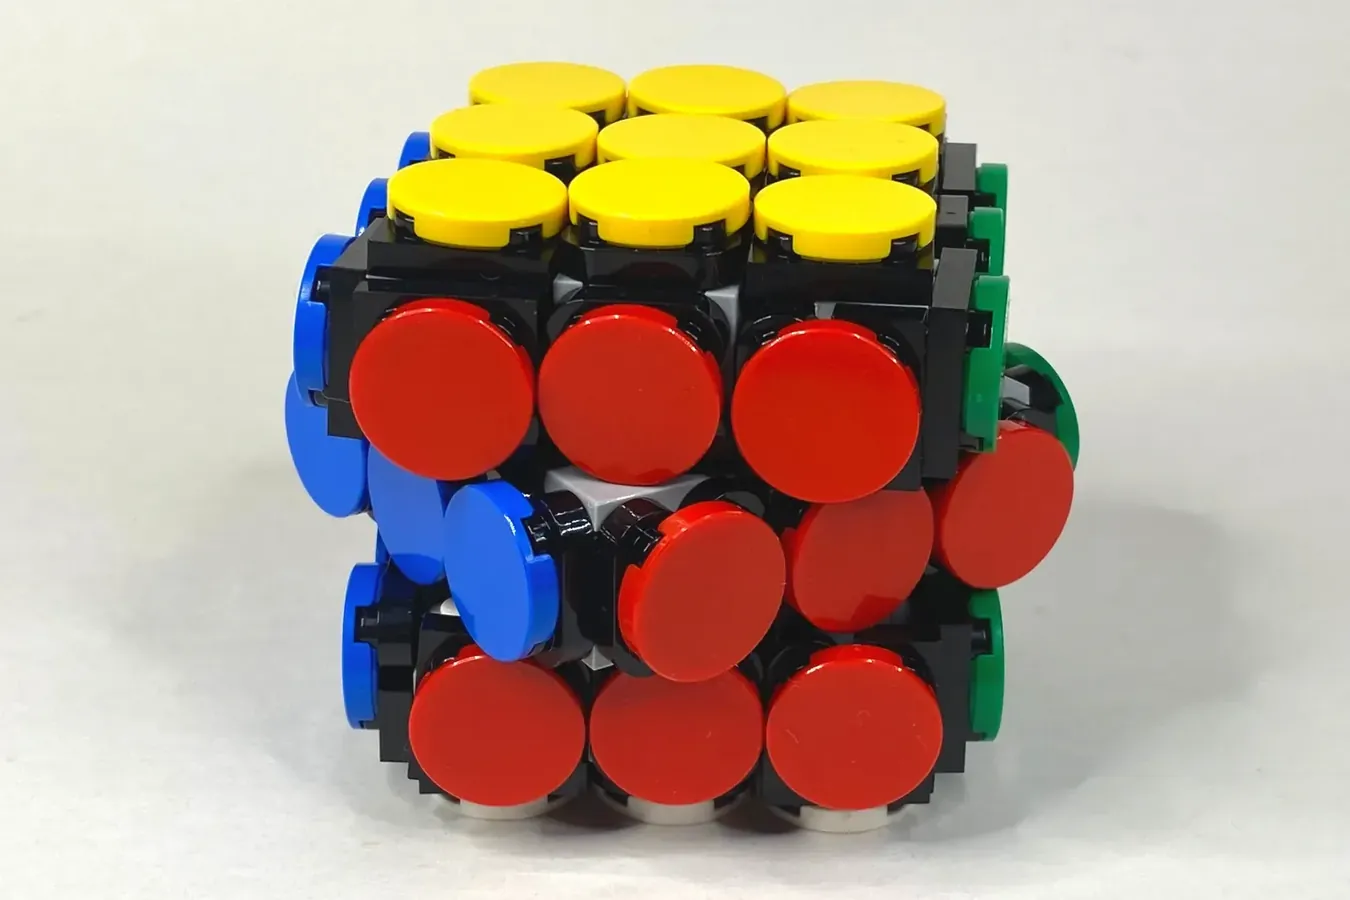 LEGO RUBIK'S CUBE Achieves 10K Support on LEGO IDEAS